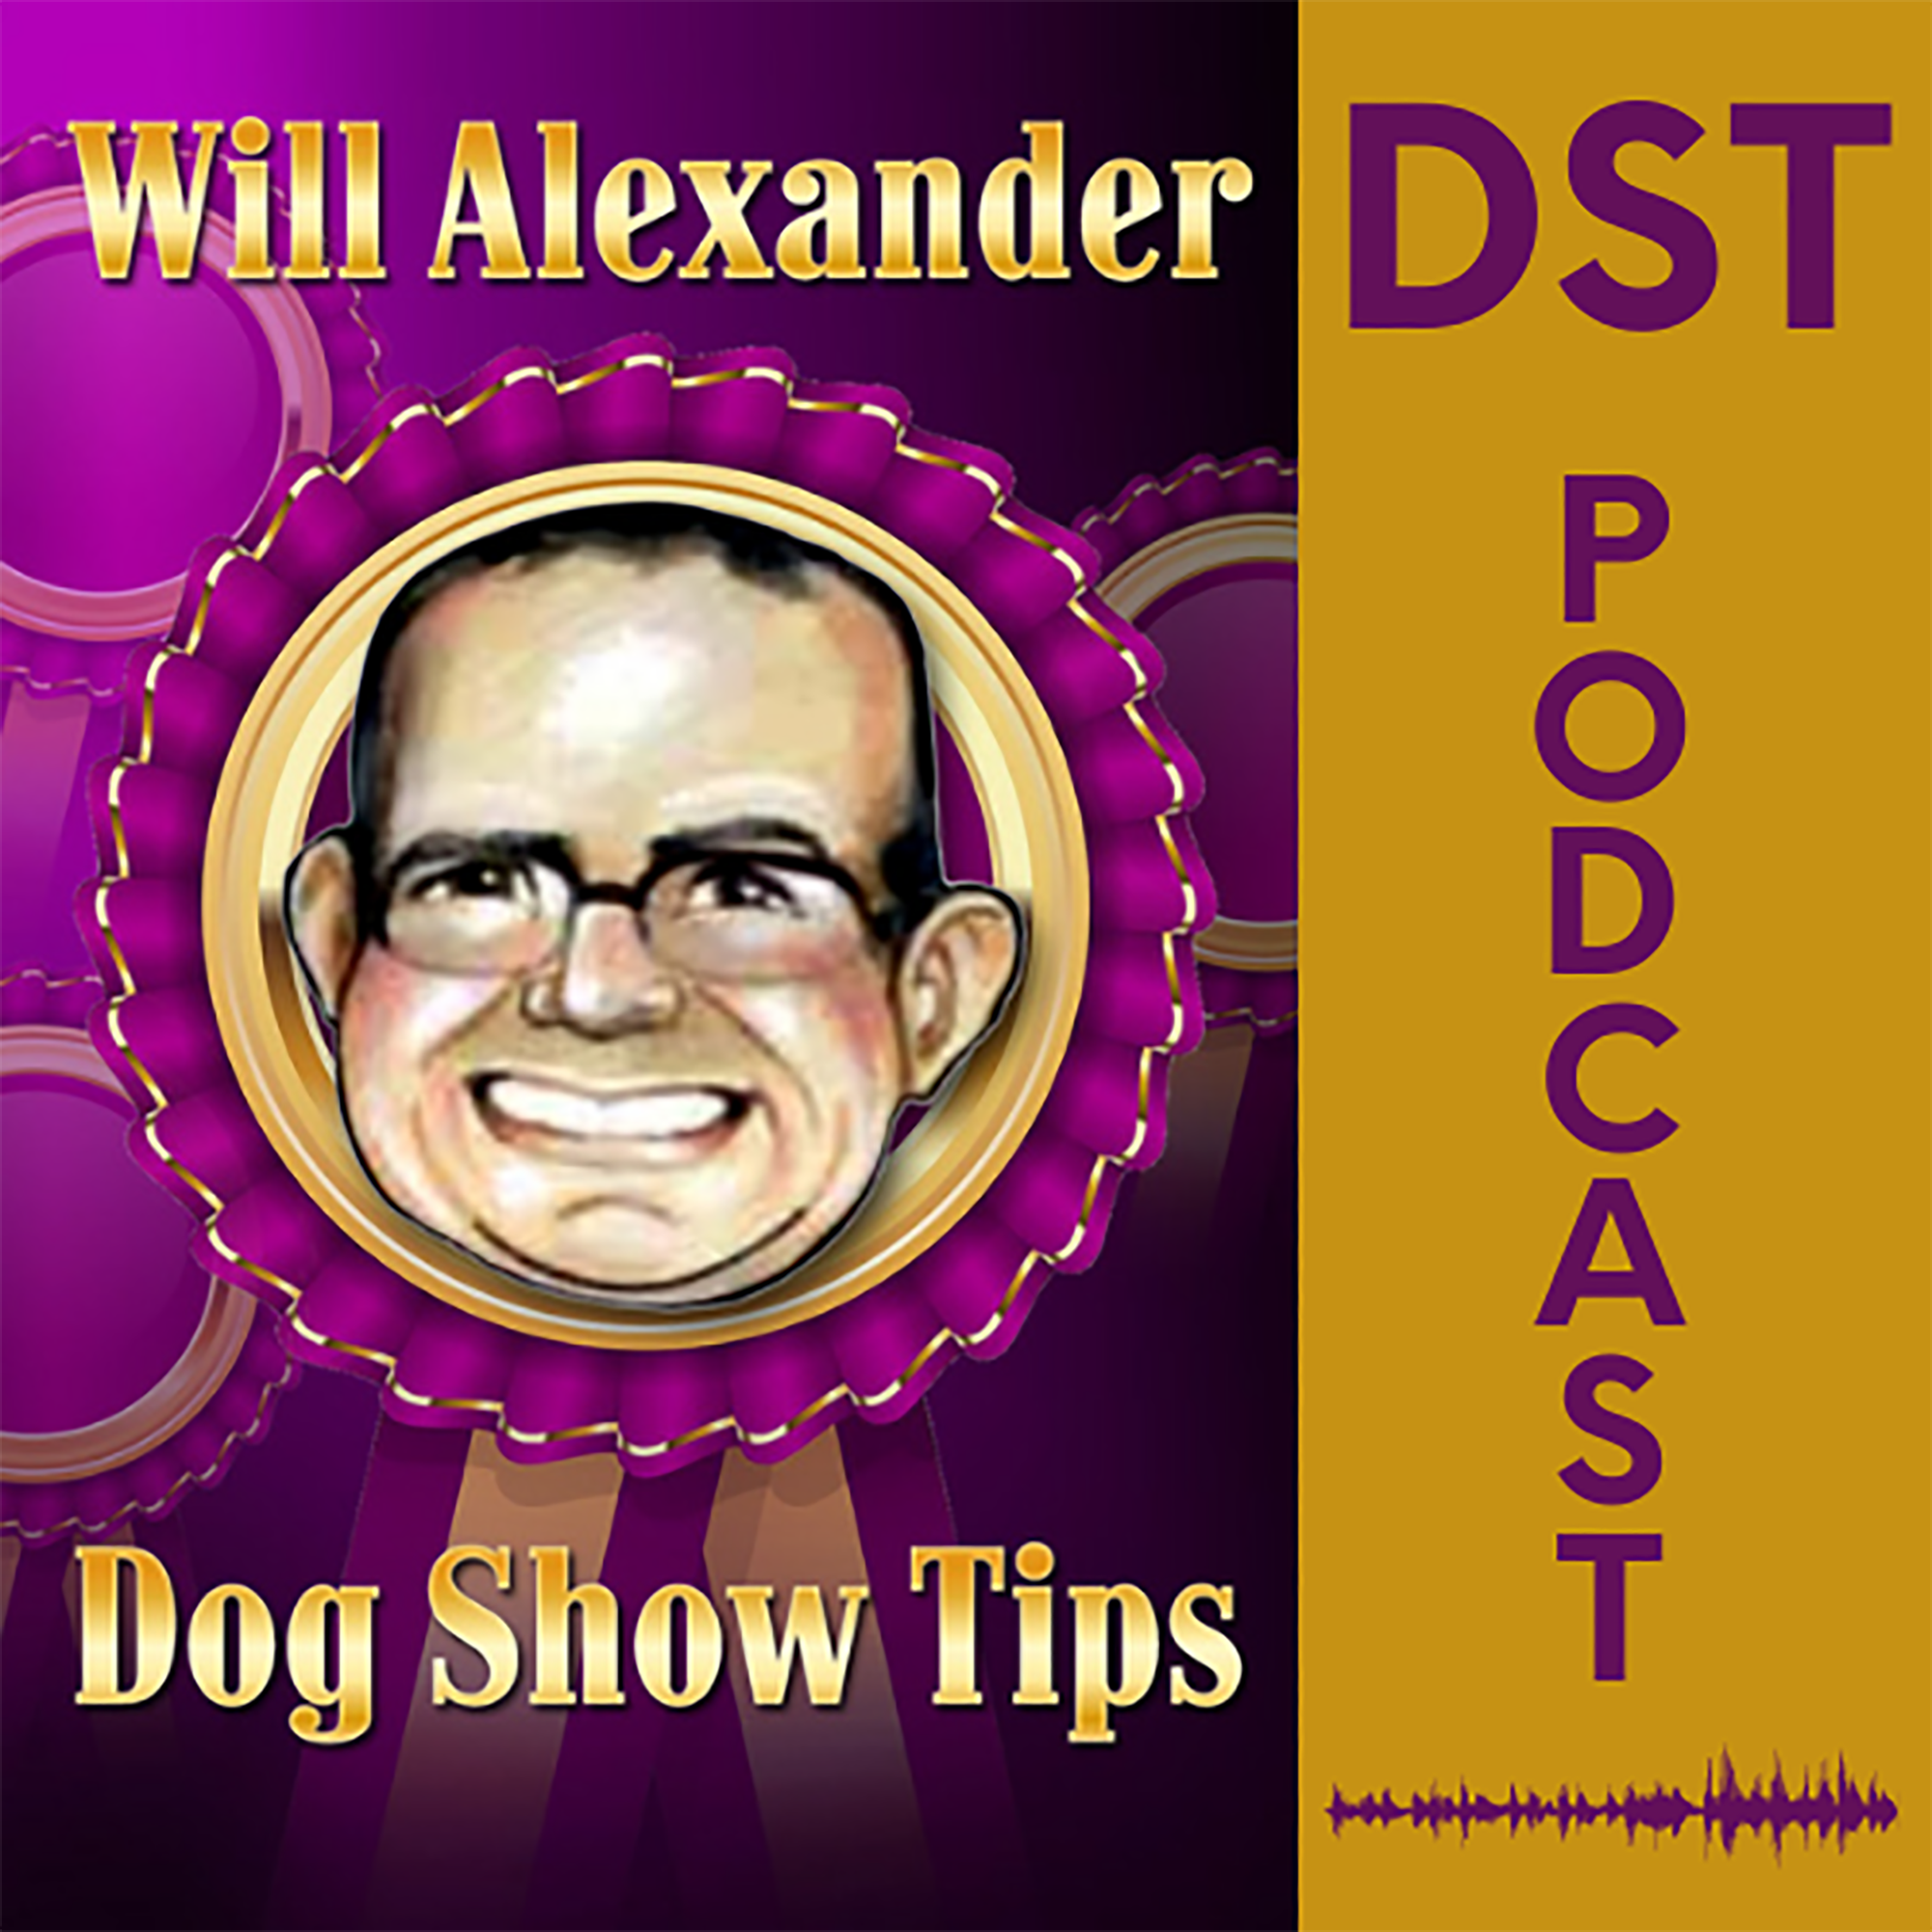  Dog Show Tips-  Bruce Schultz - Will Alexander interview